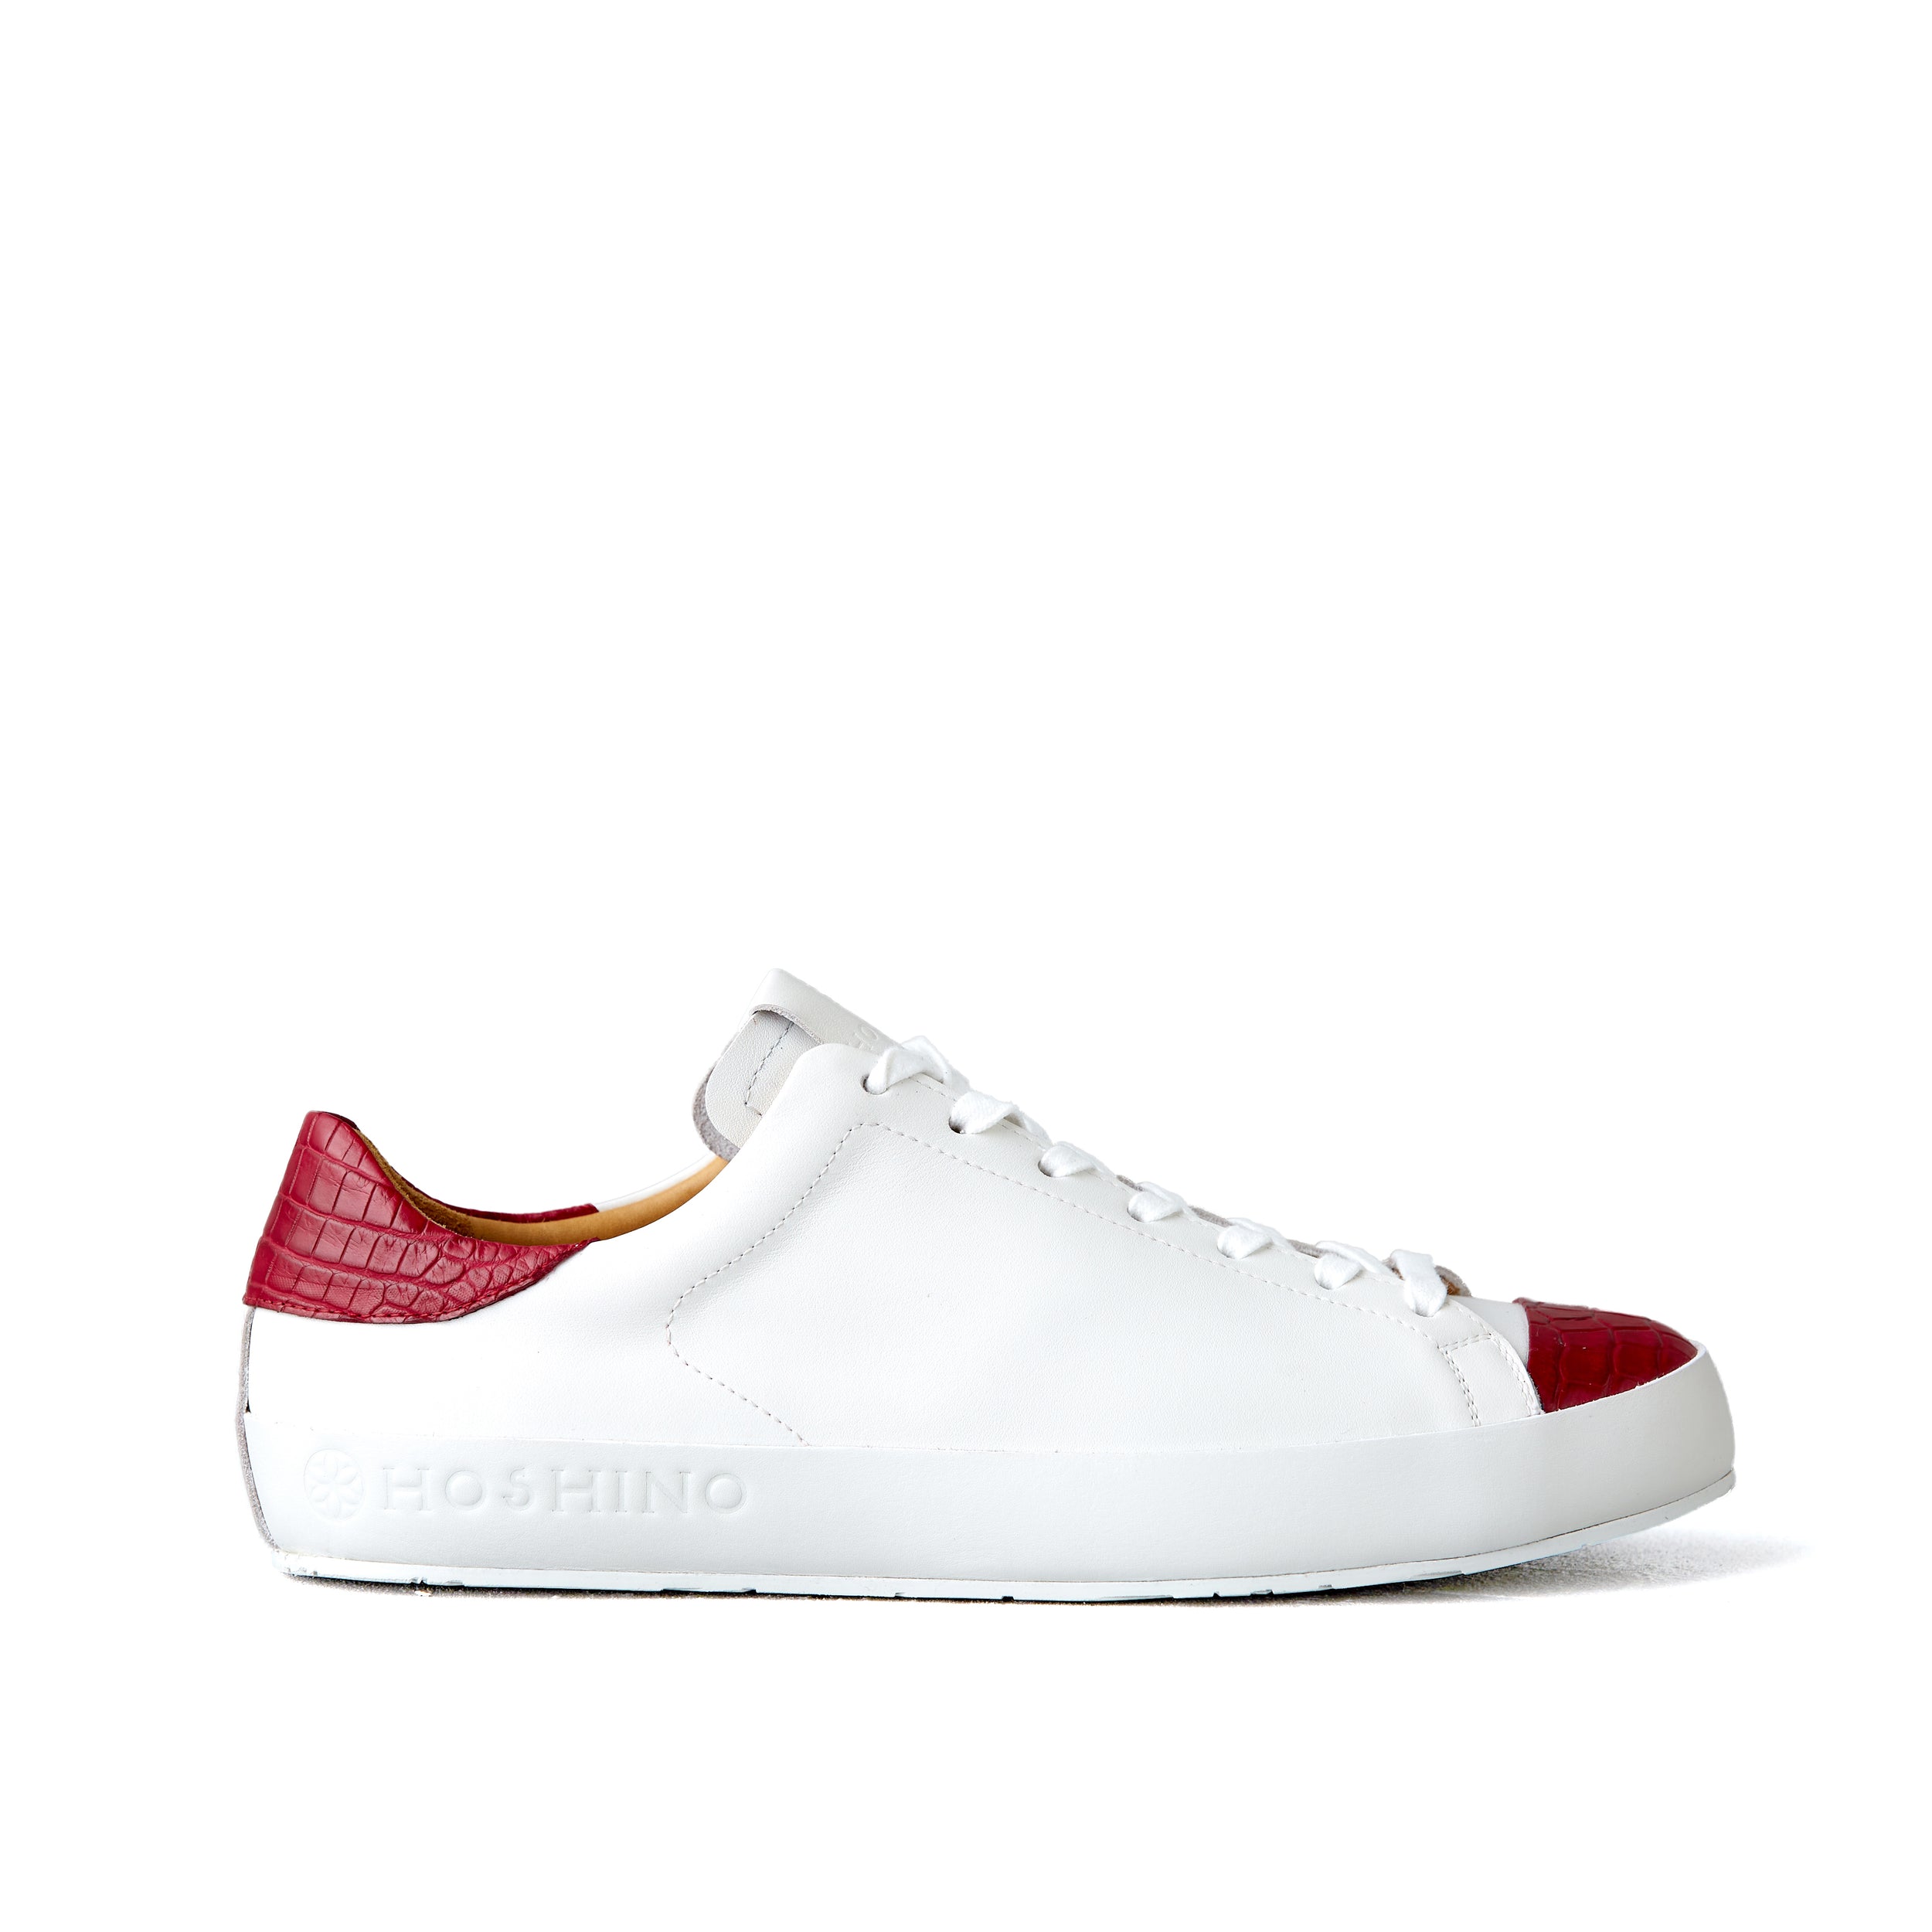 [women's] Liberte - low-top sneakers - combination toe white and burgundy crocodile